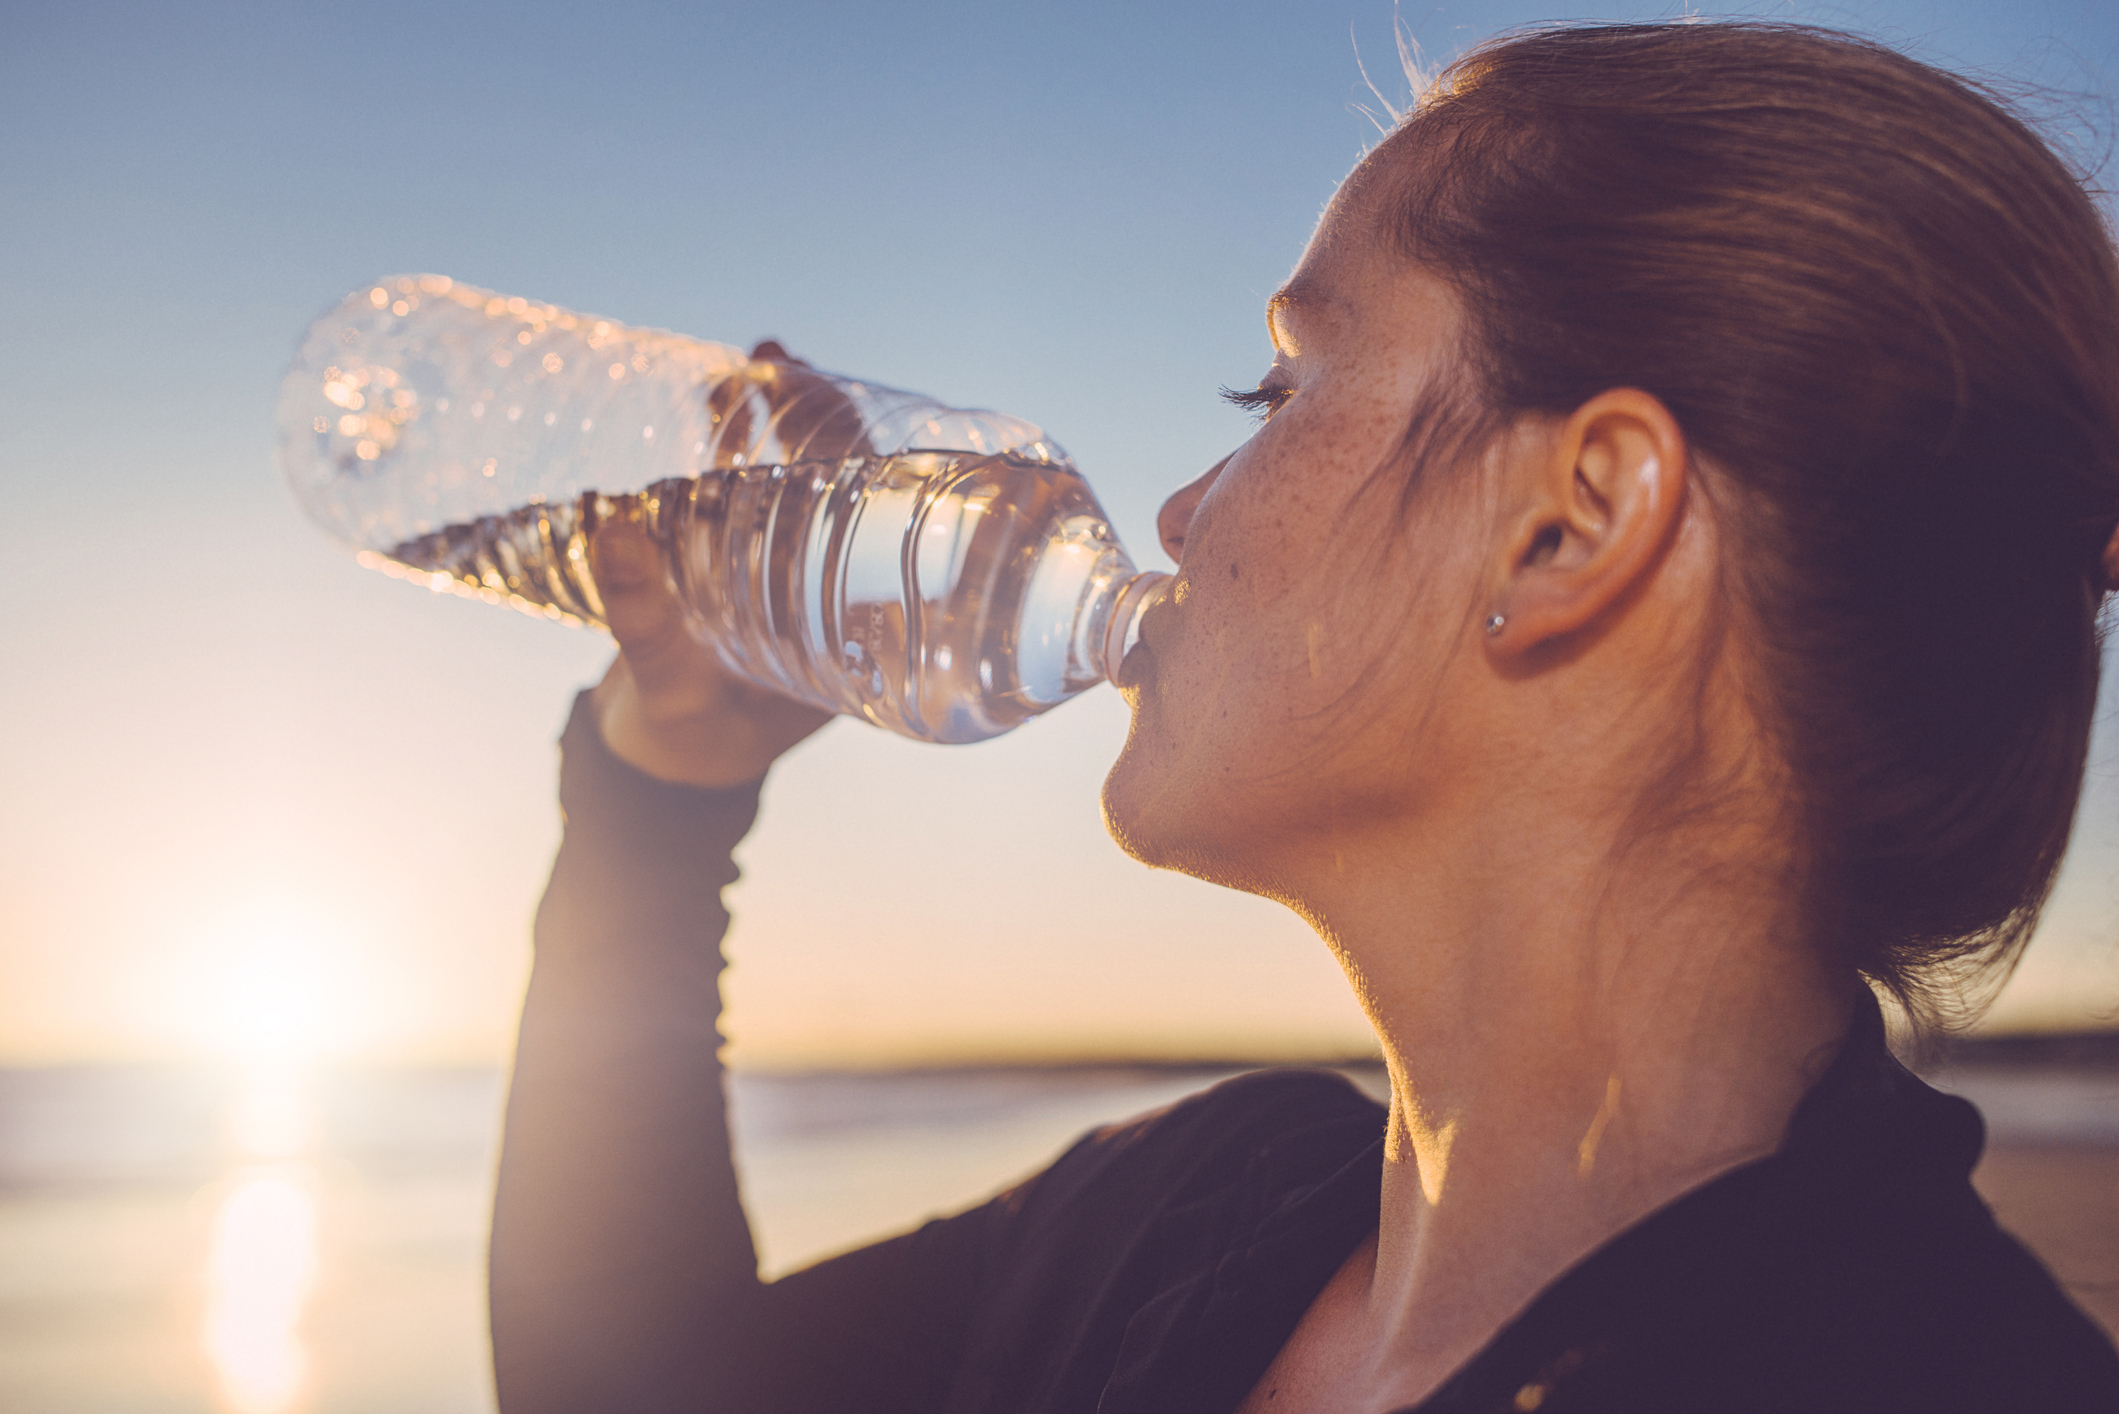 Woman drinking water from a bottled water bottle